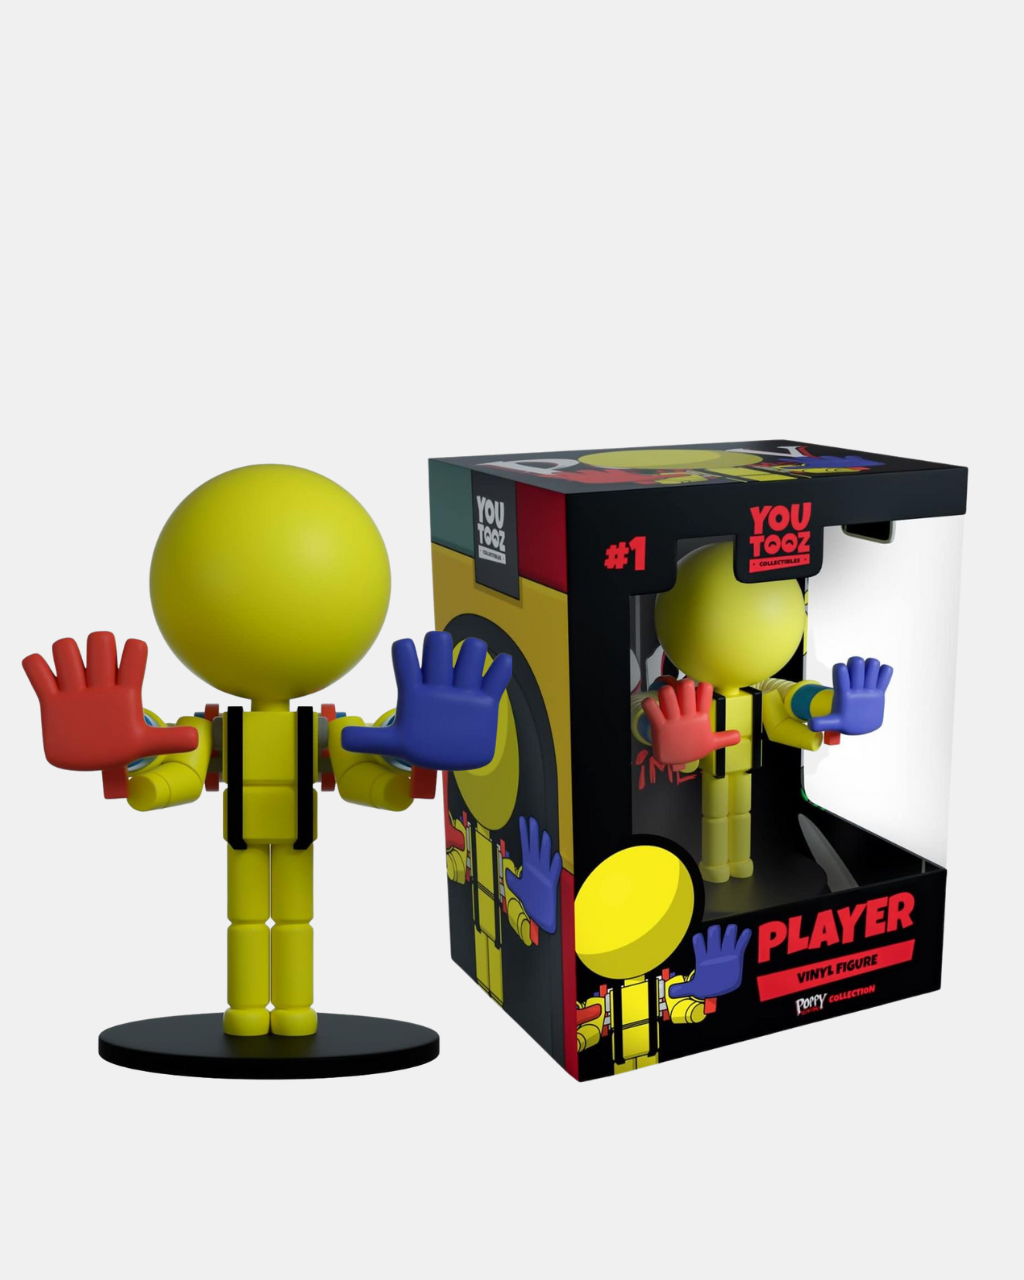  Player Youtooz Figure, 4.7 Vinyl Toys from Poppy